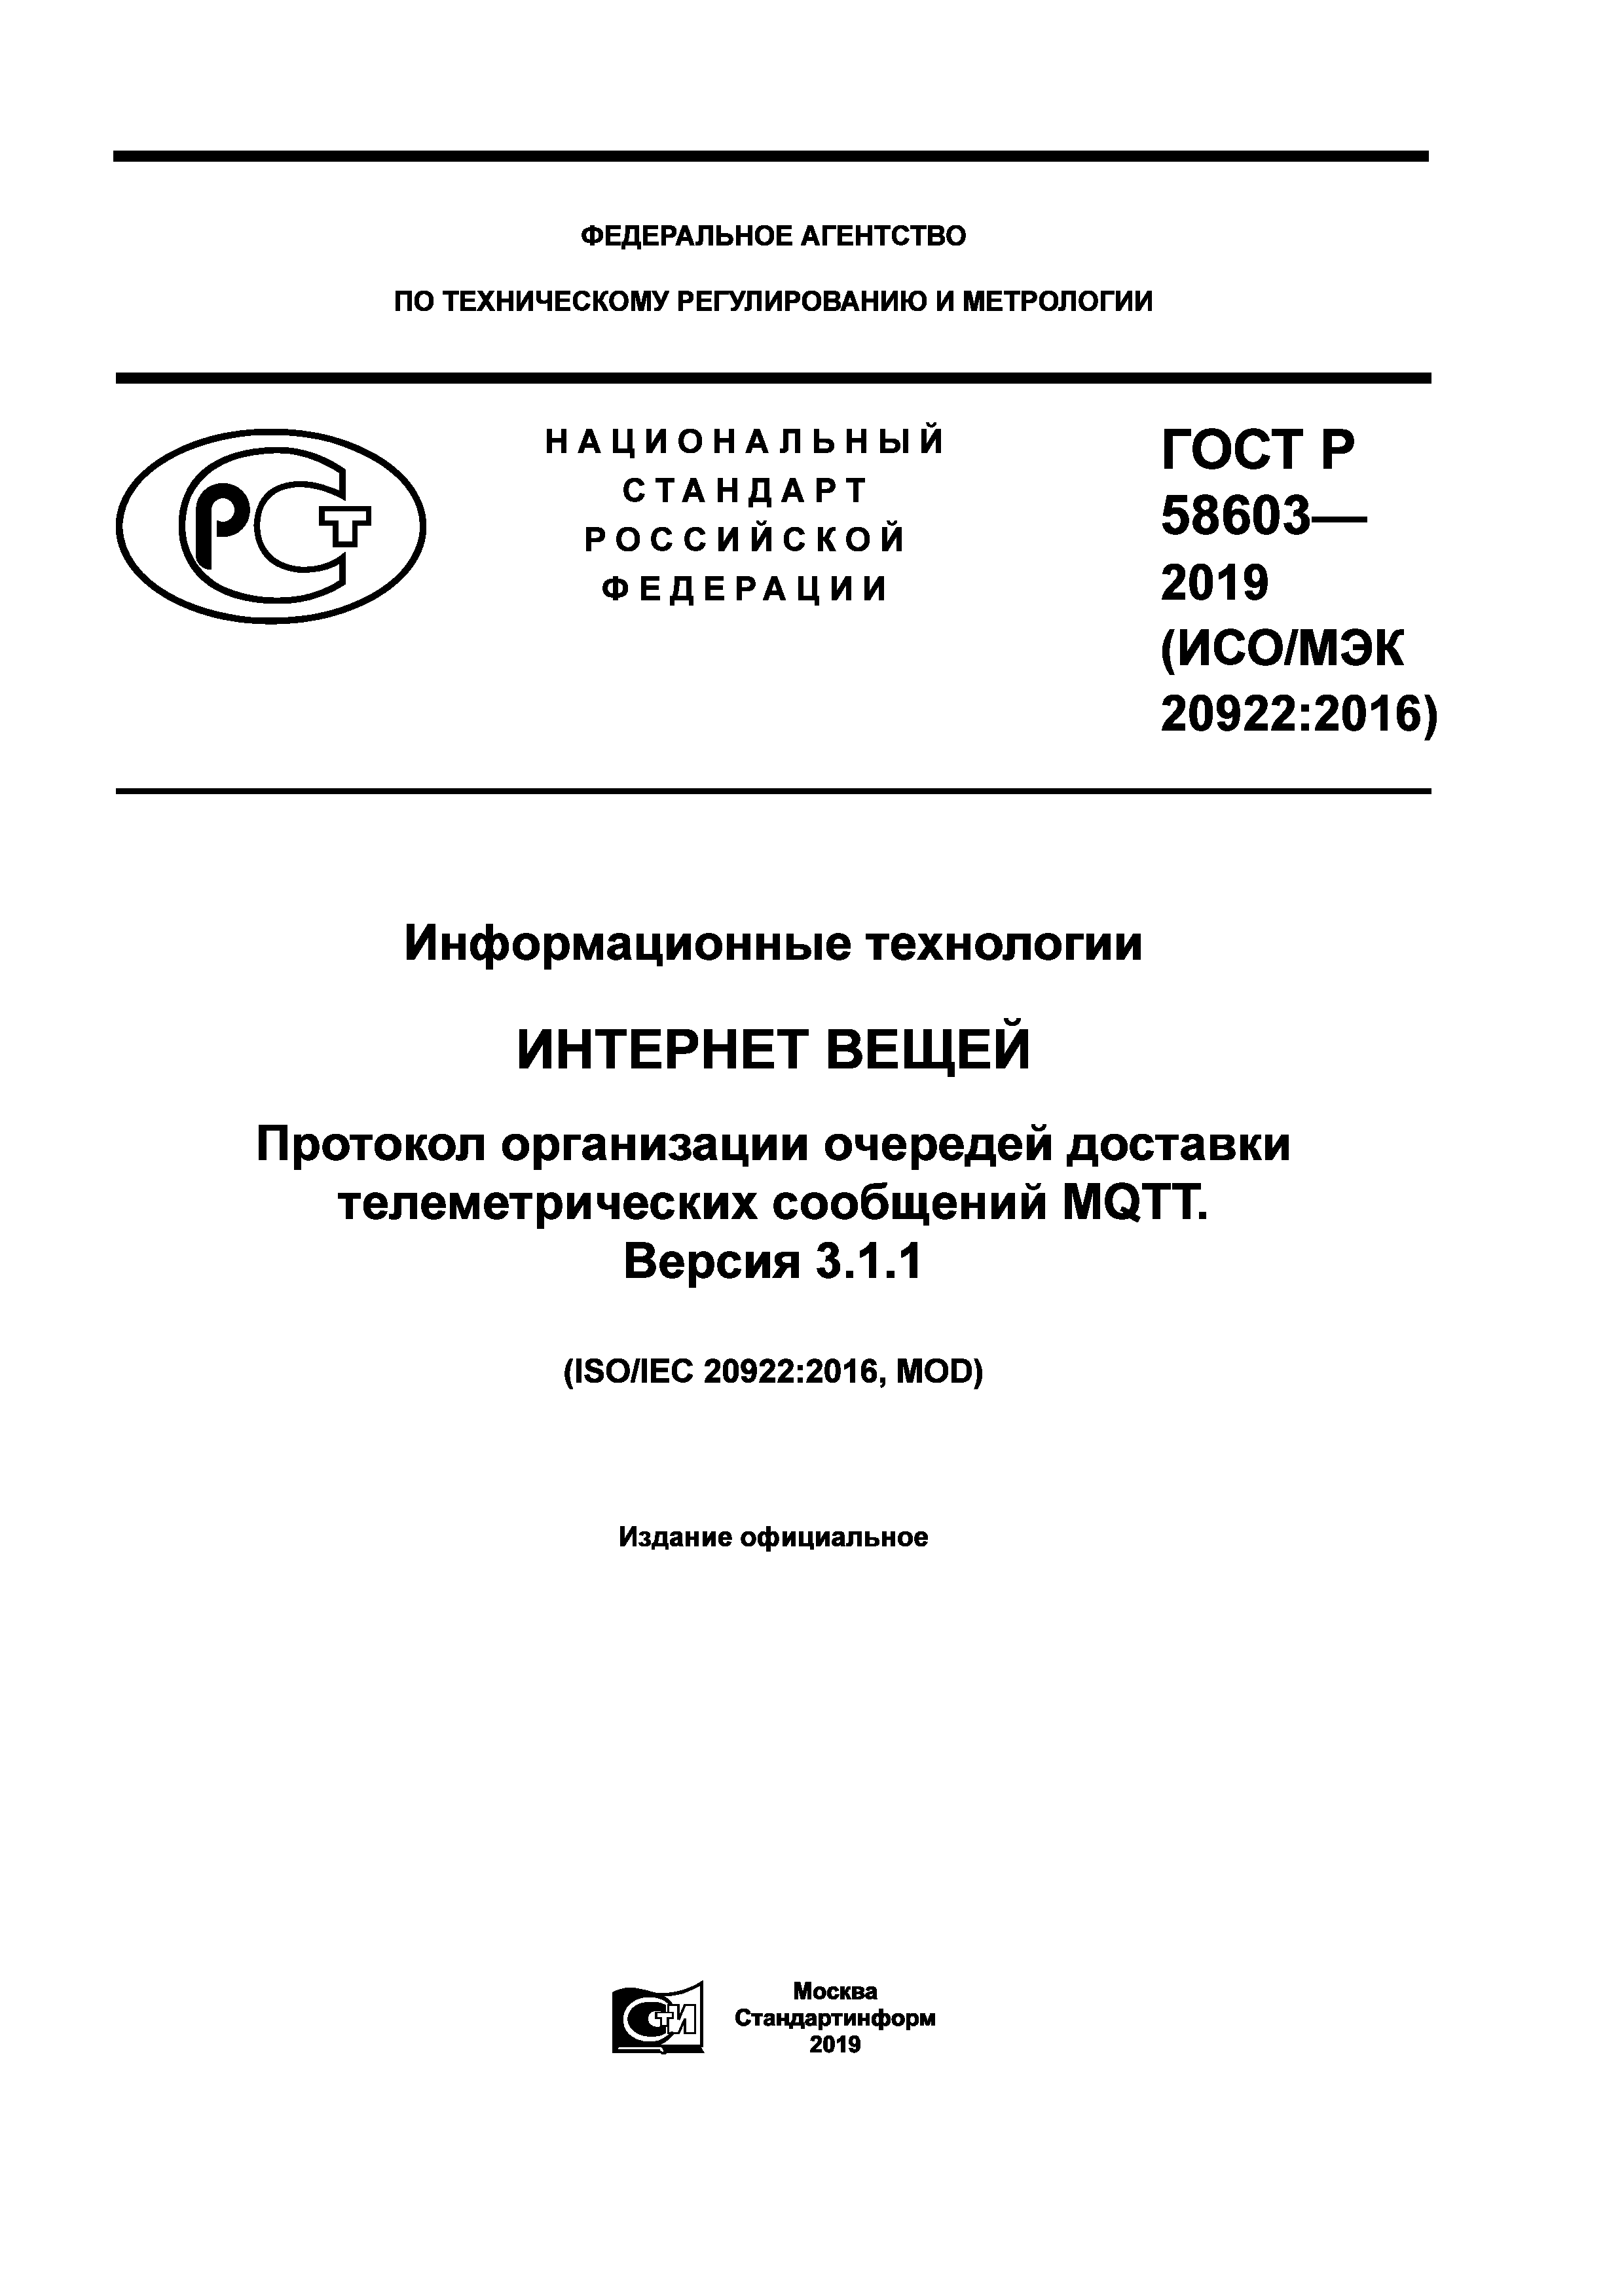 ГОСТ Р 58603-2019